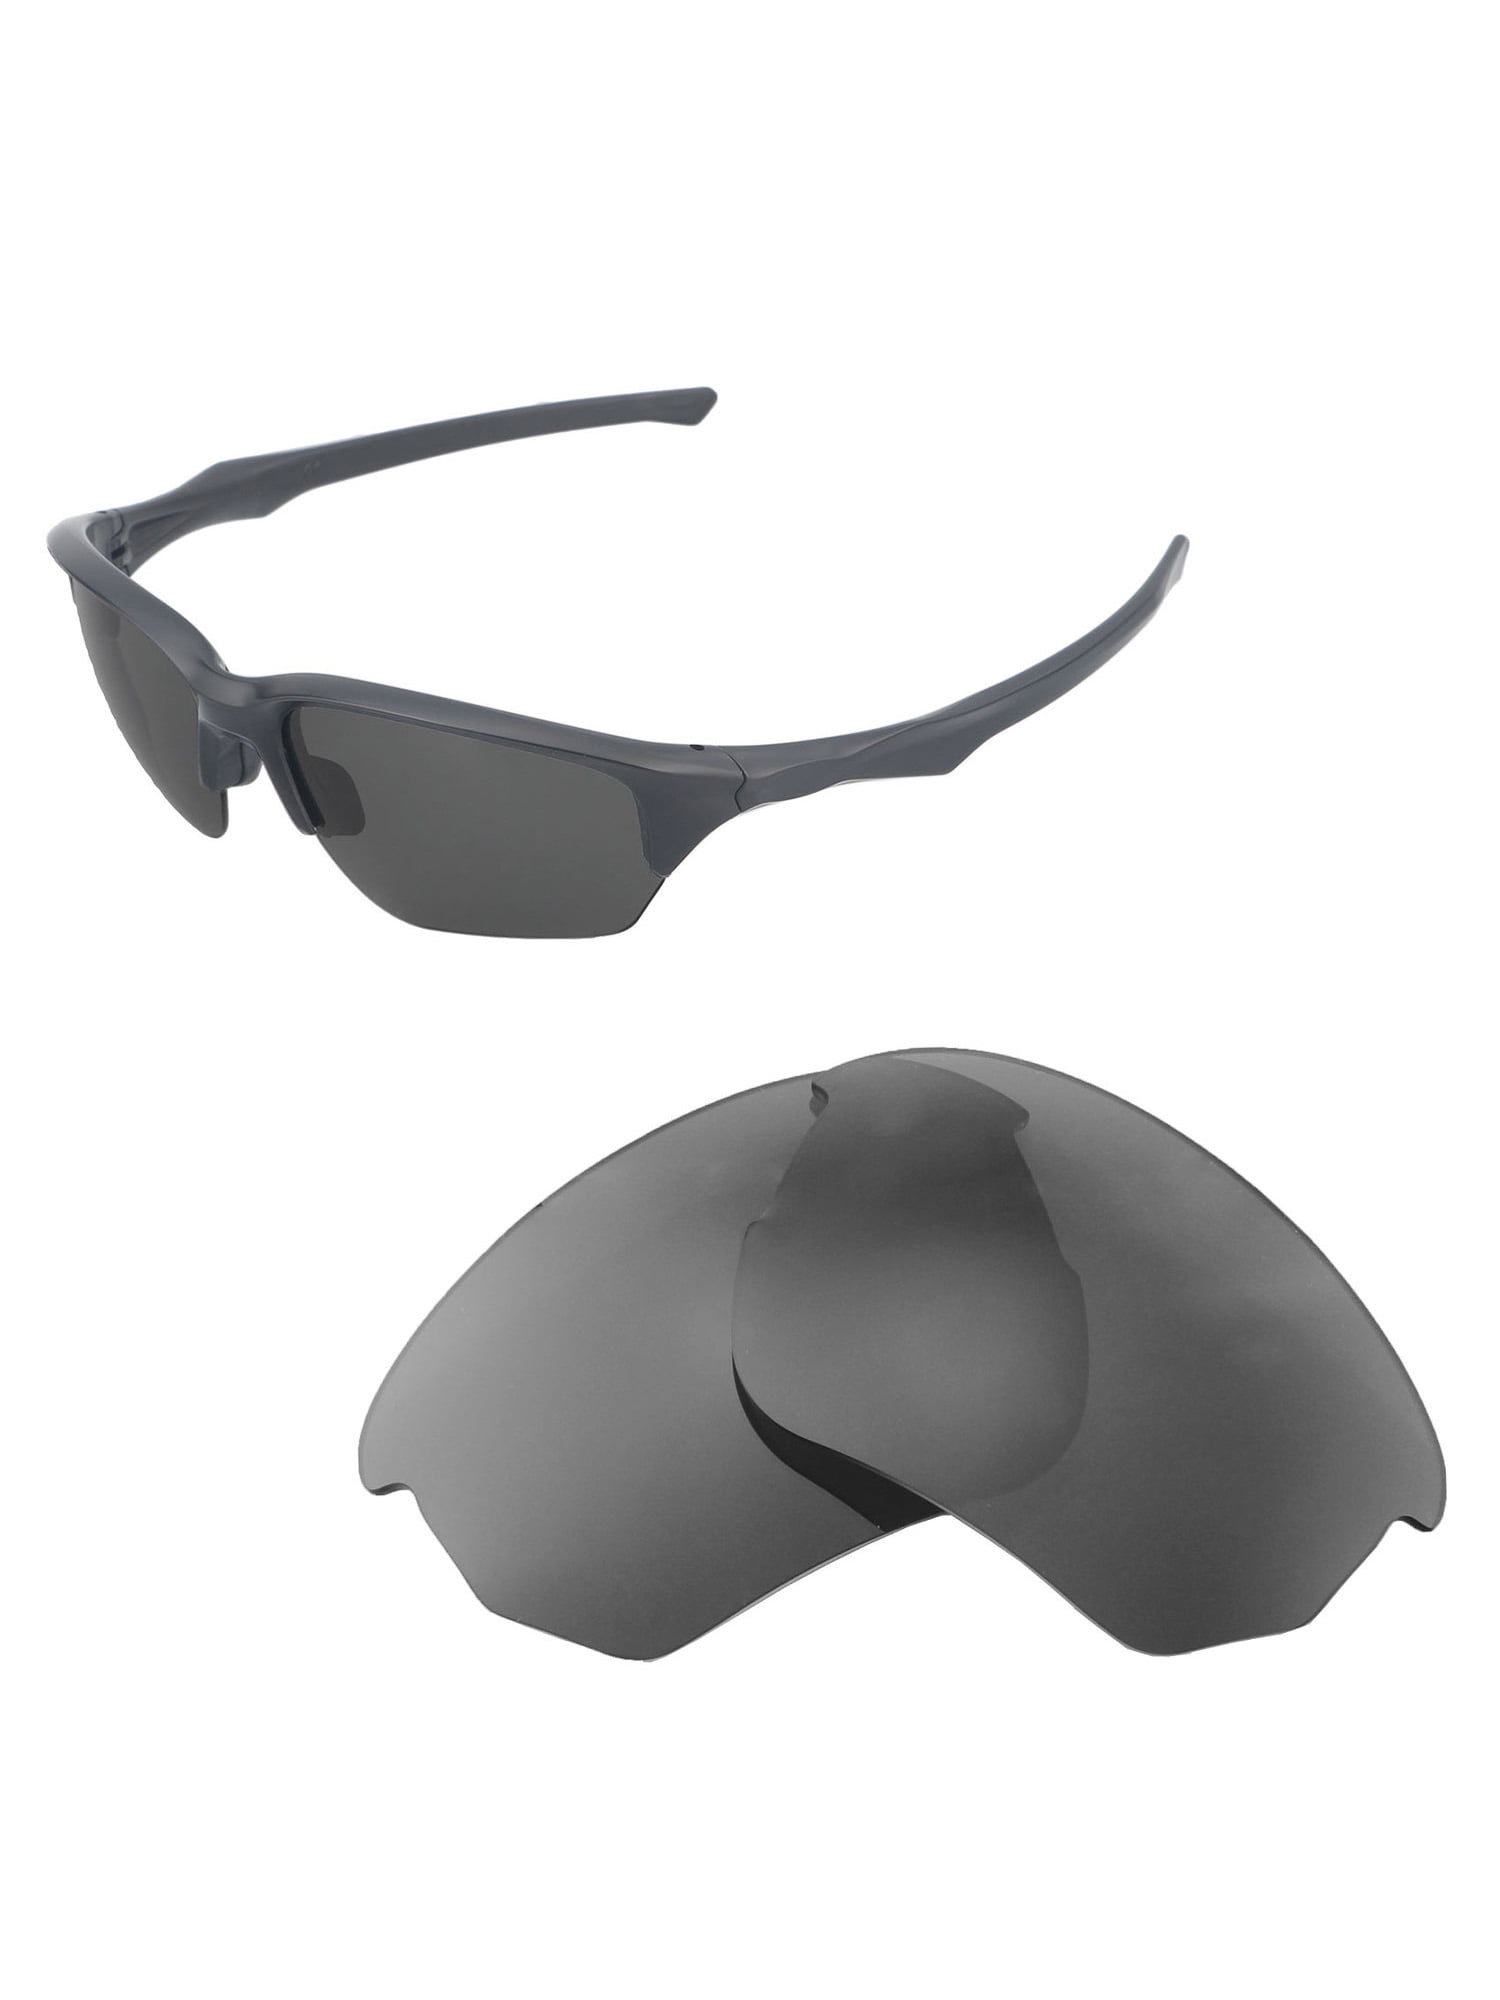 Walleva Black Polarized Replacement Lenses for Oakley Flak Beta Sunglasses  